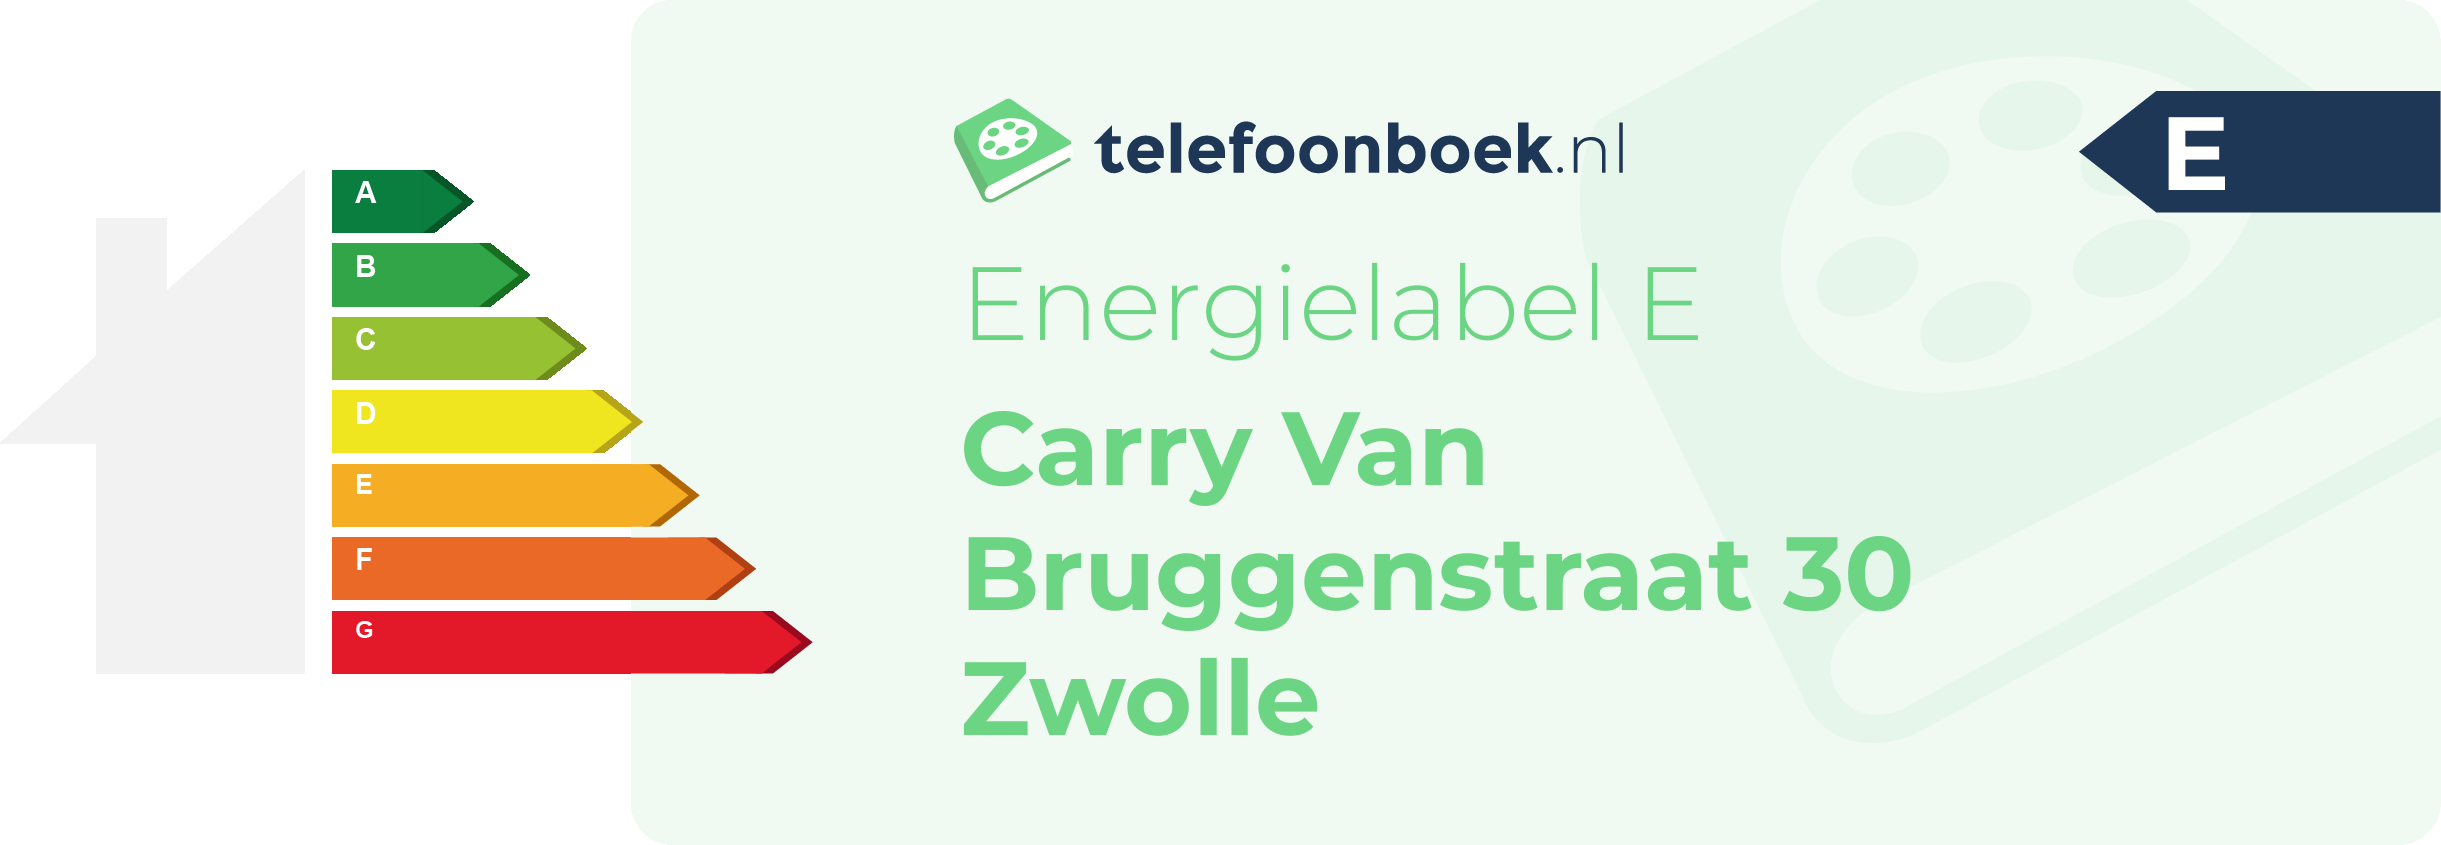 Energielabel Carry Van Bruggenstraat 30 Zwolle